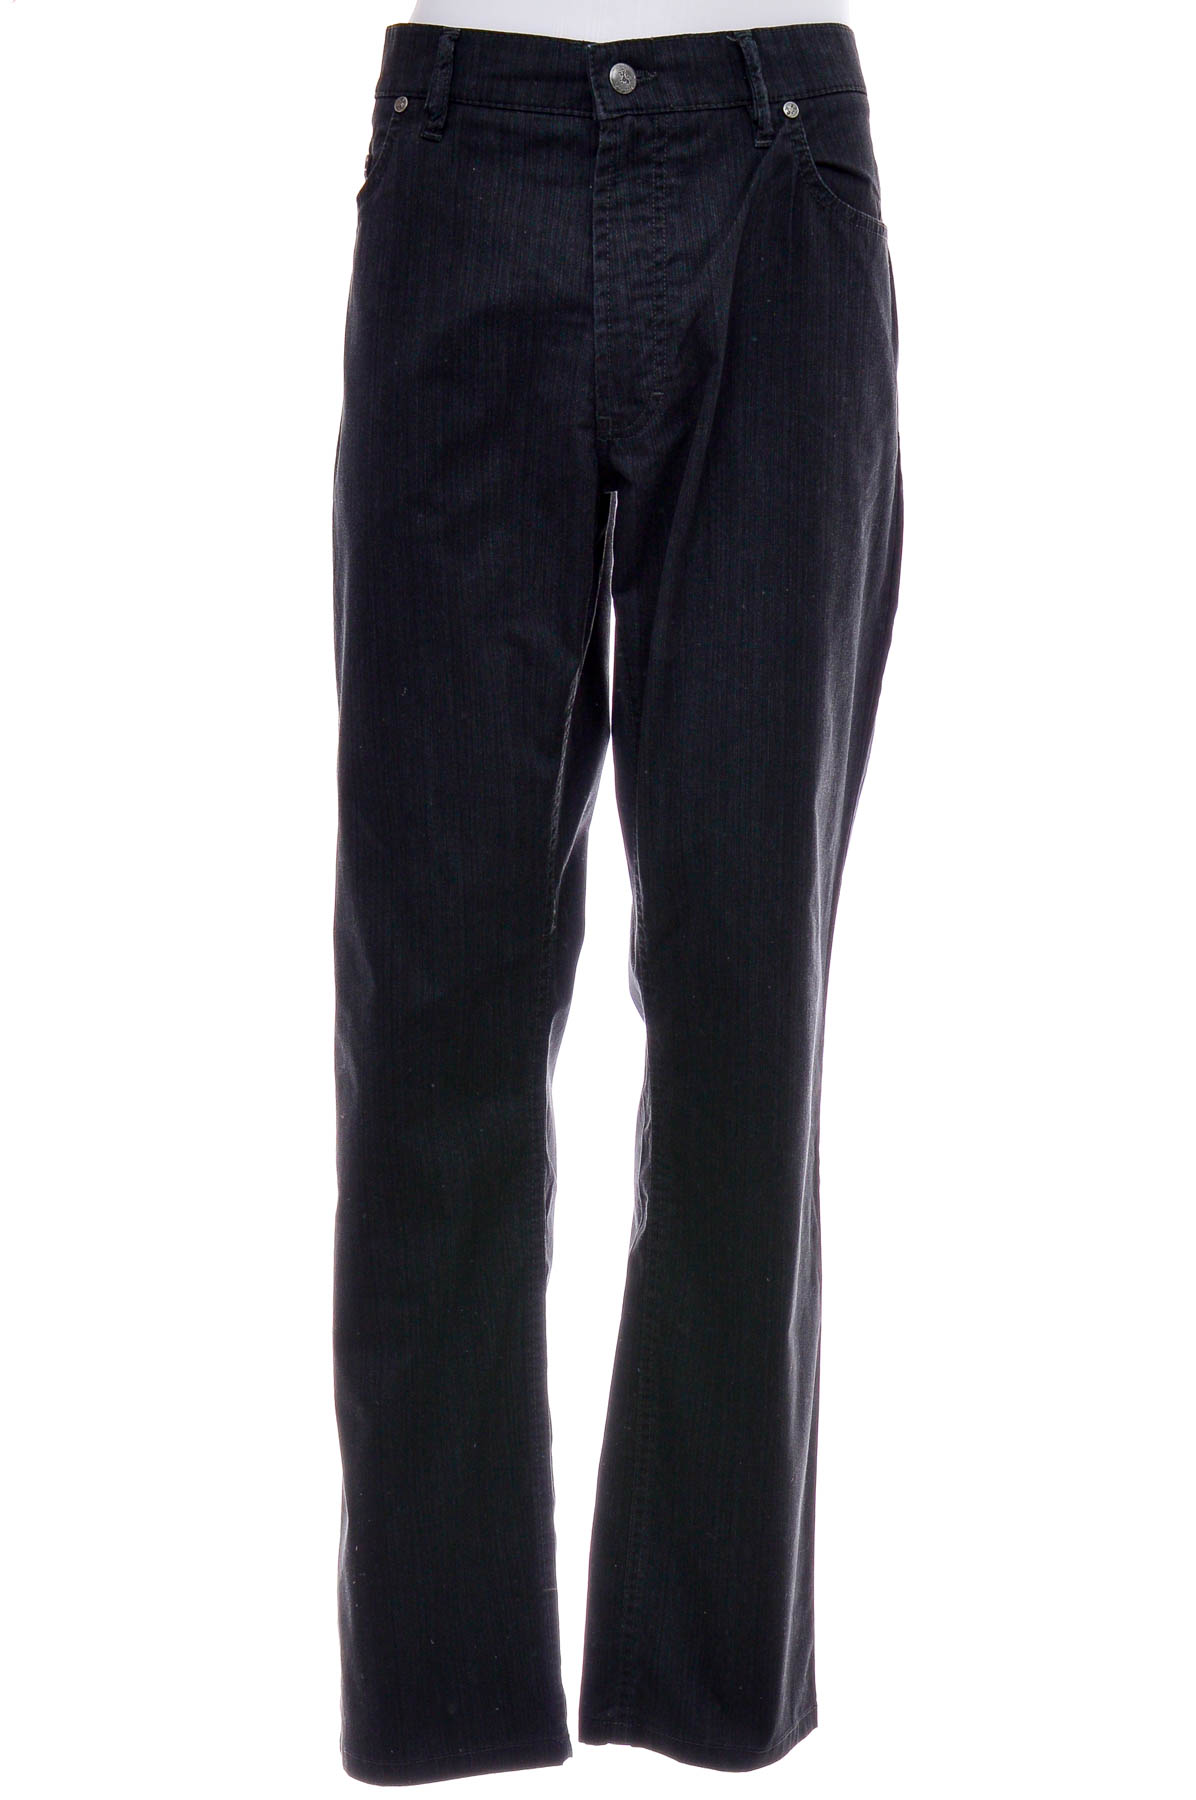 Men's trousers - Garnaby's - 0